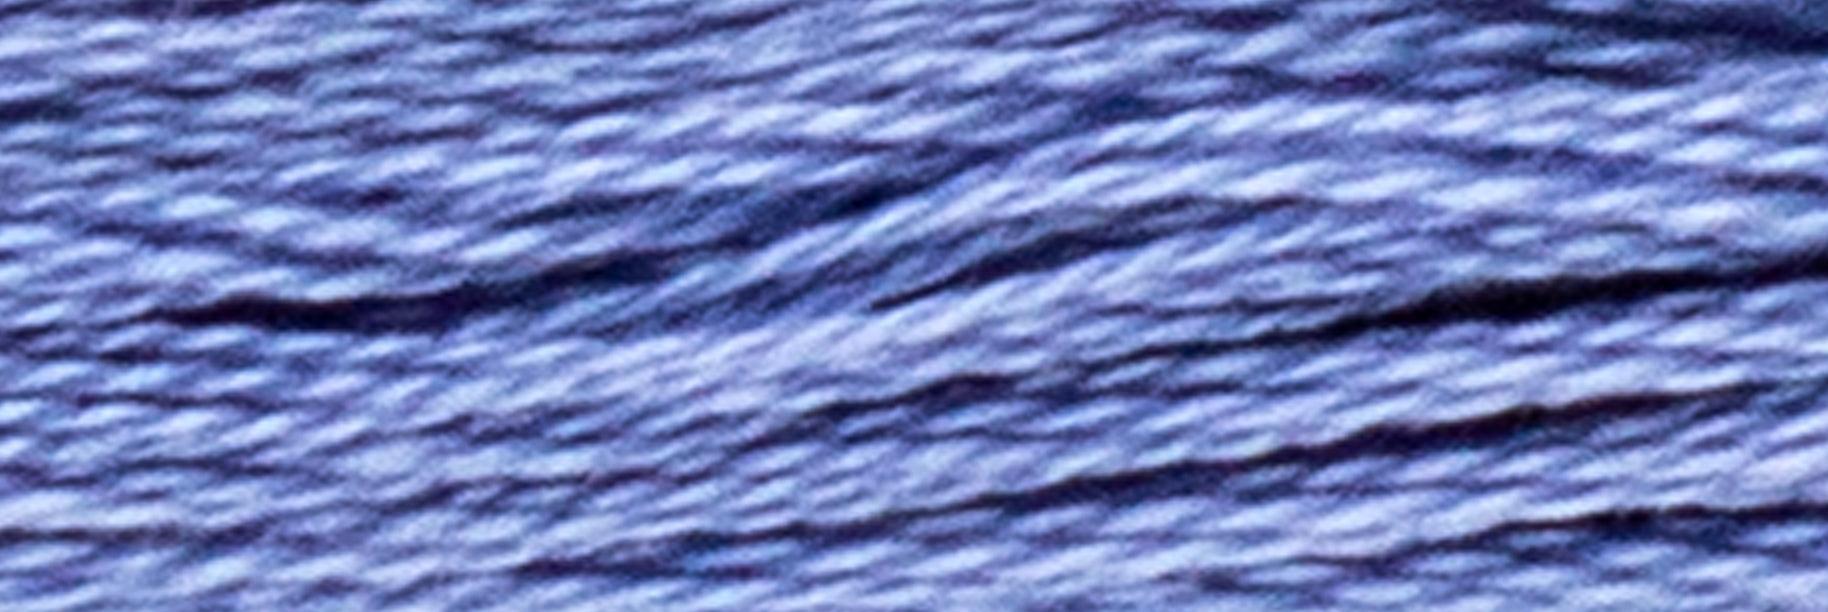 Stranded Cotton Luca-S - 139 / DMC 793 / Anchor 939 - Luca-S Stranded Cotton